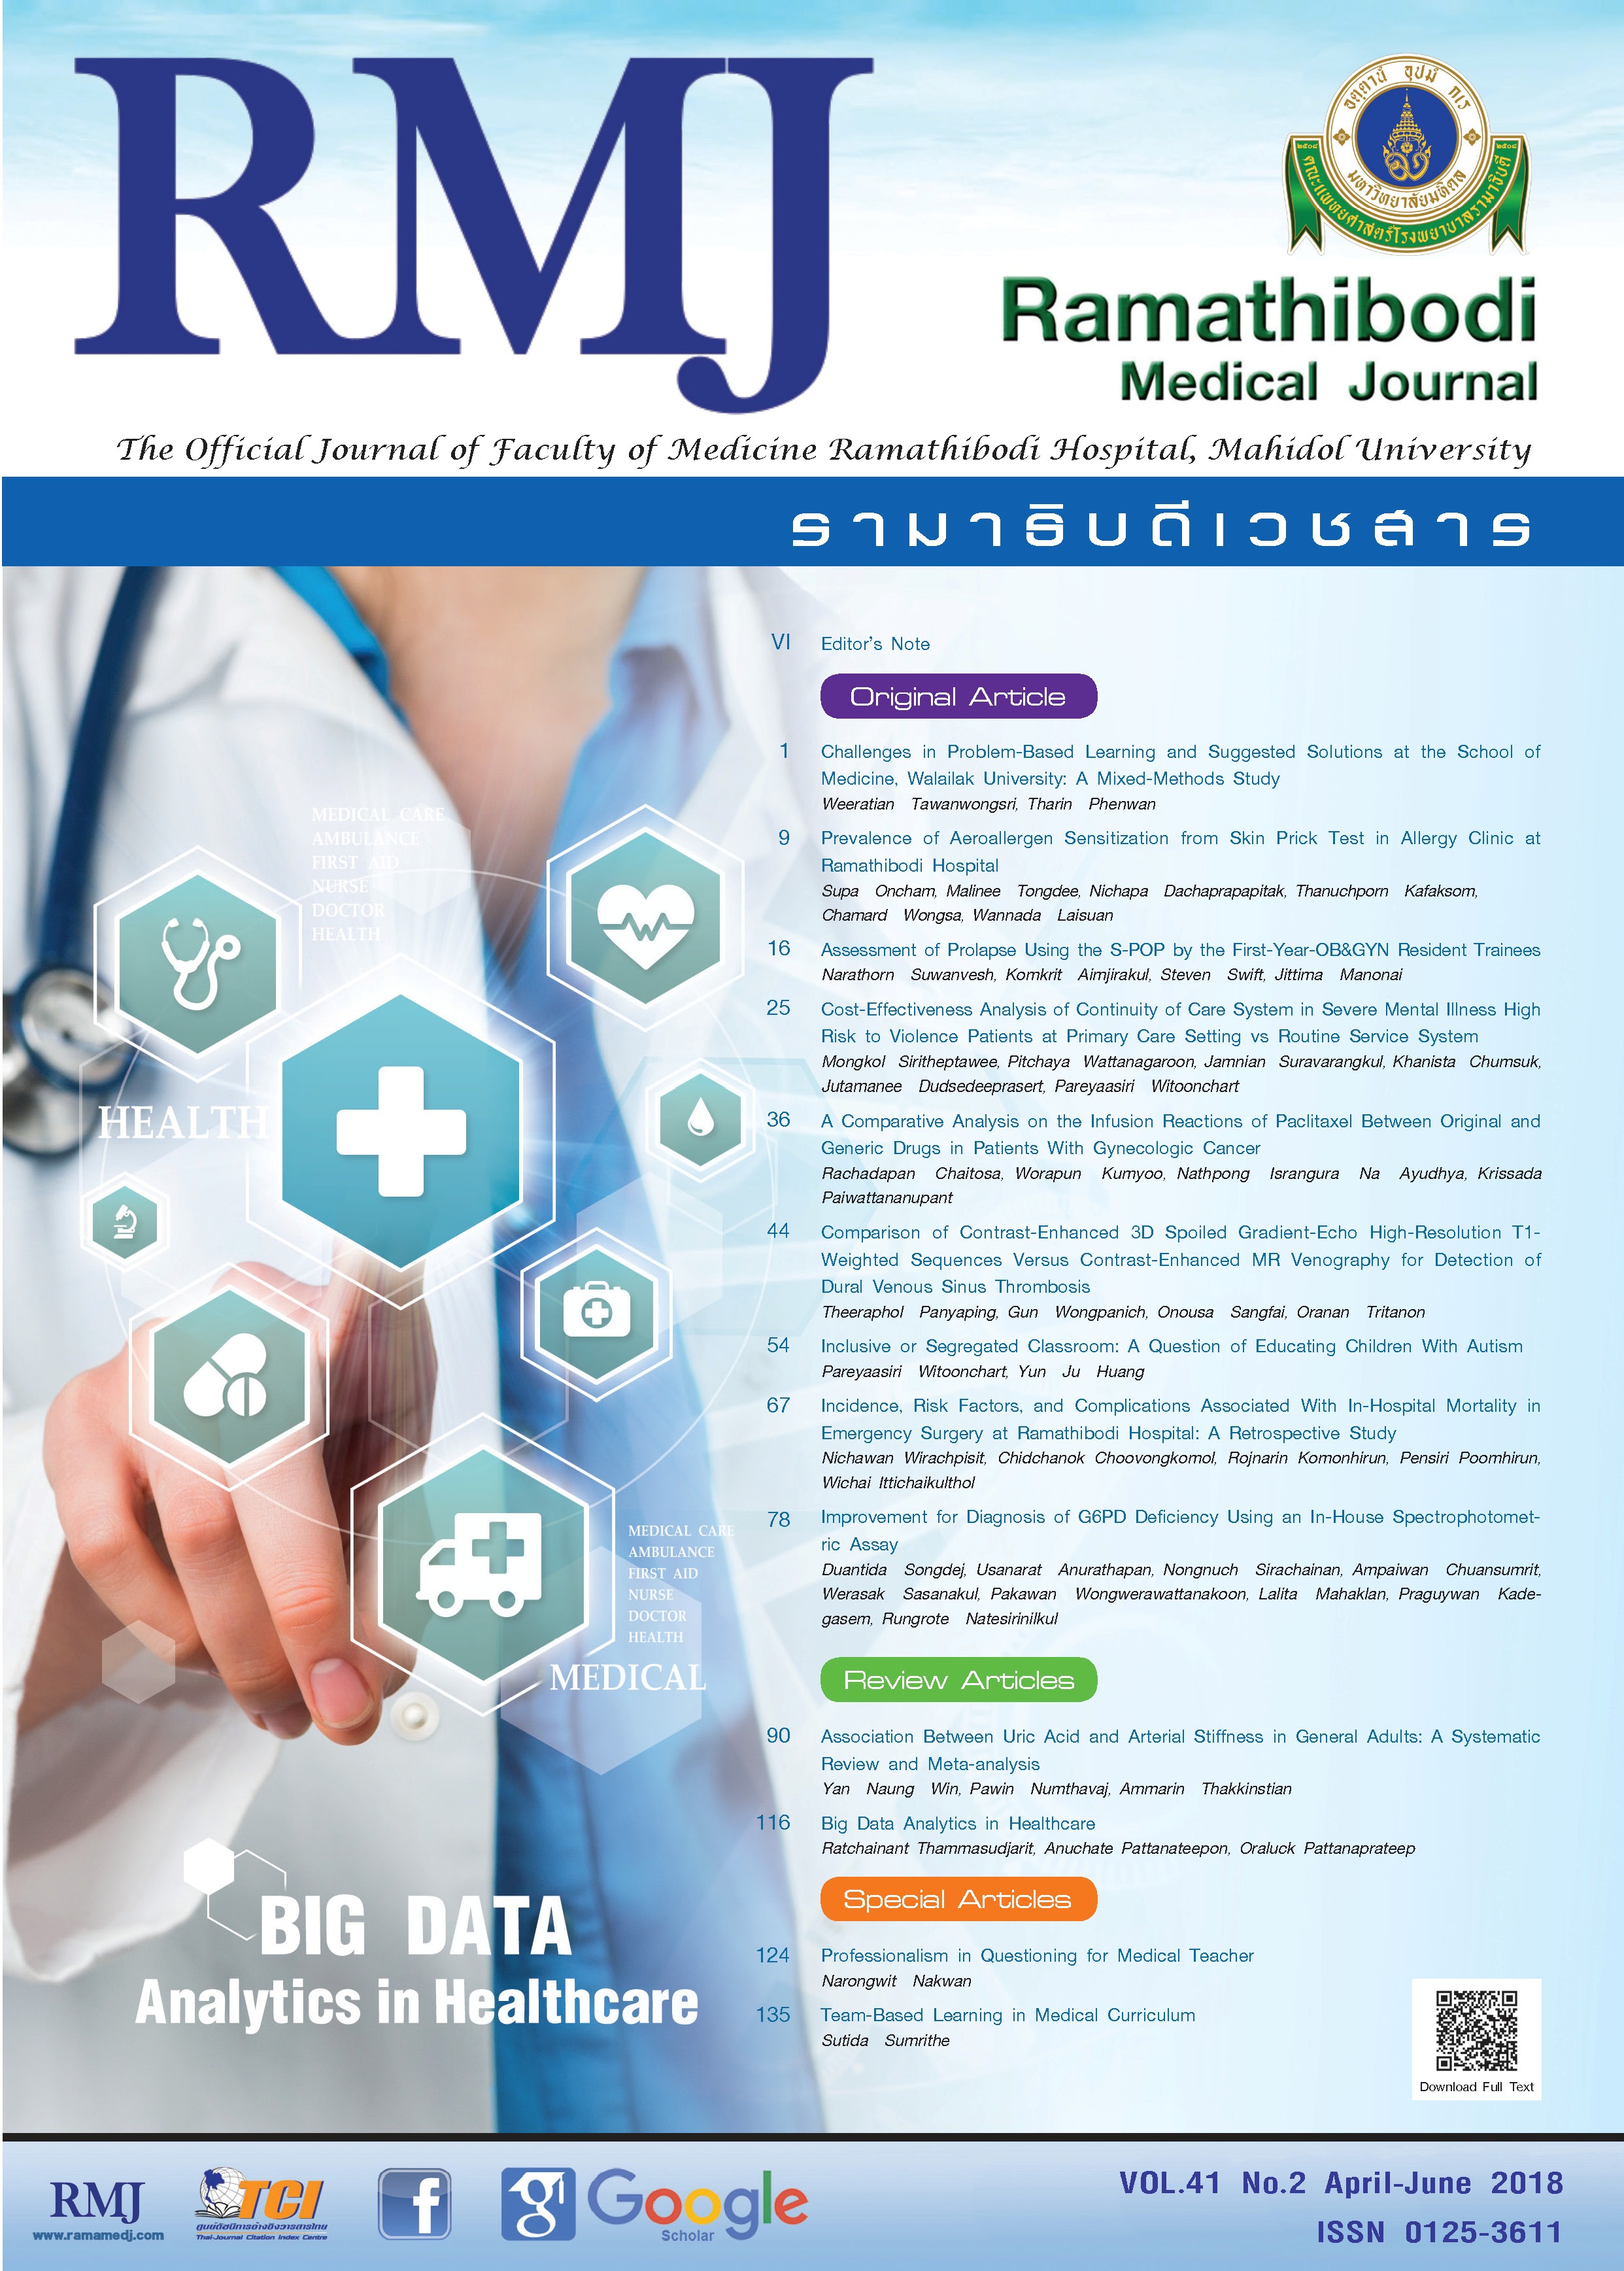 Big Data Analytics in Healthcare | Ramathibodi Medical Journal